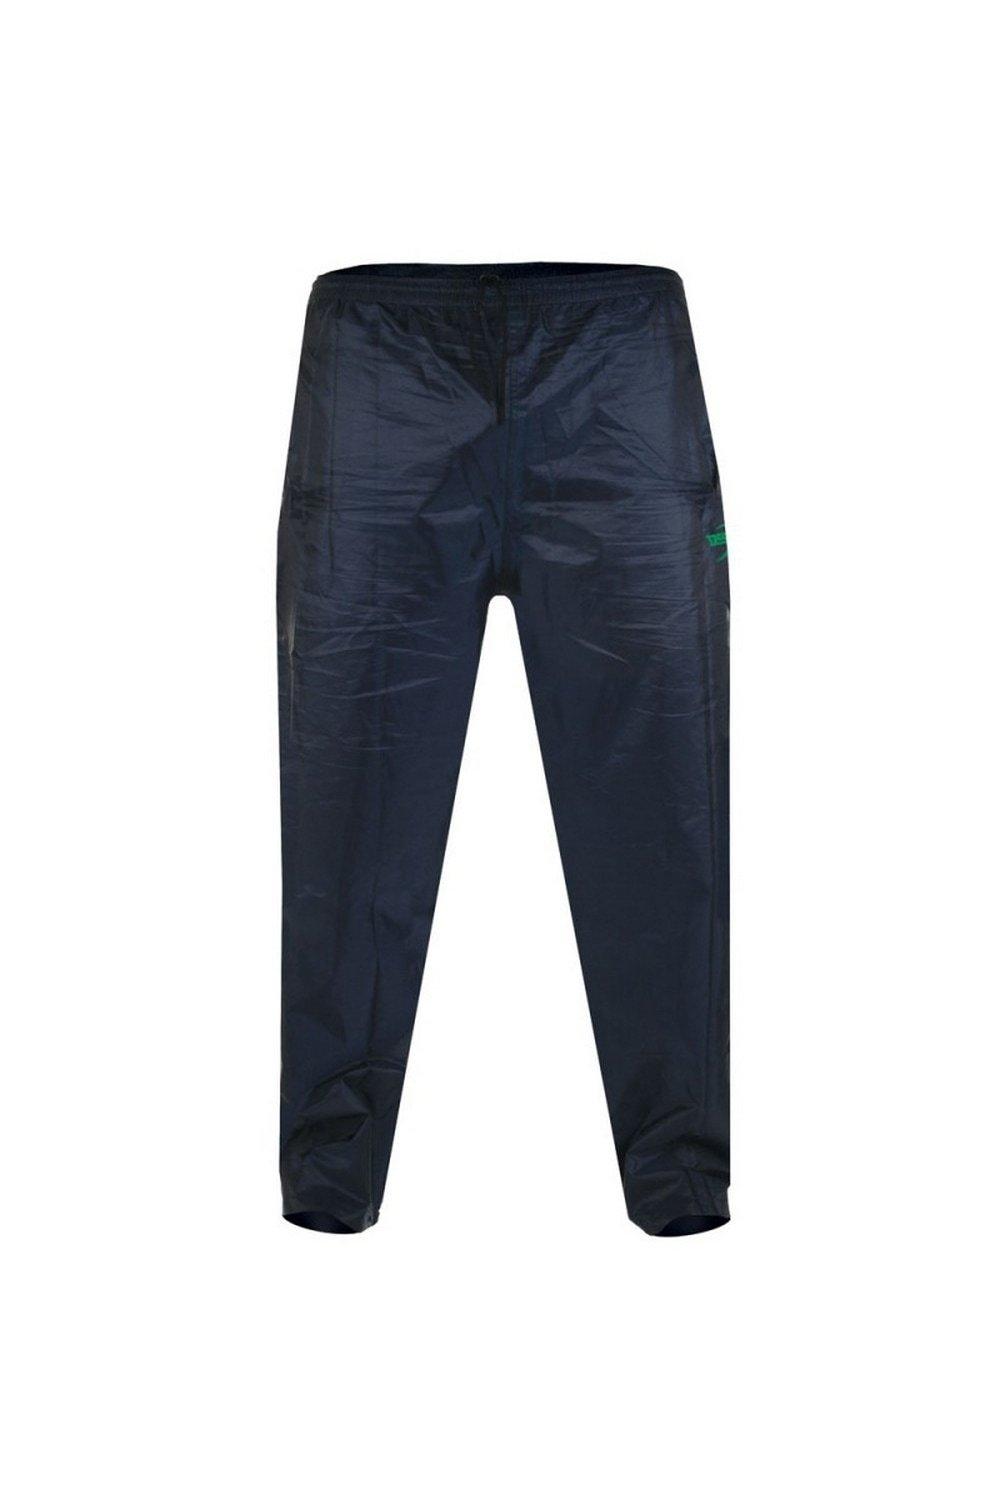 Непромокаемые брюки Elba Kingsize D555 Packaway Duke Clothing, темно-синий